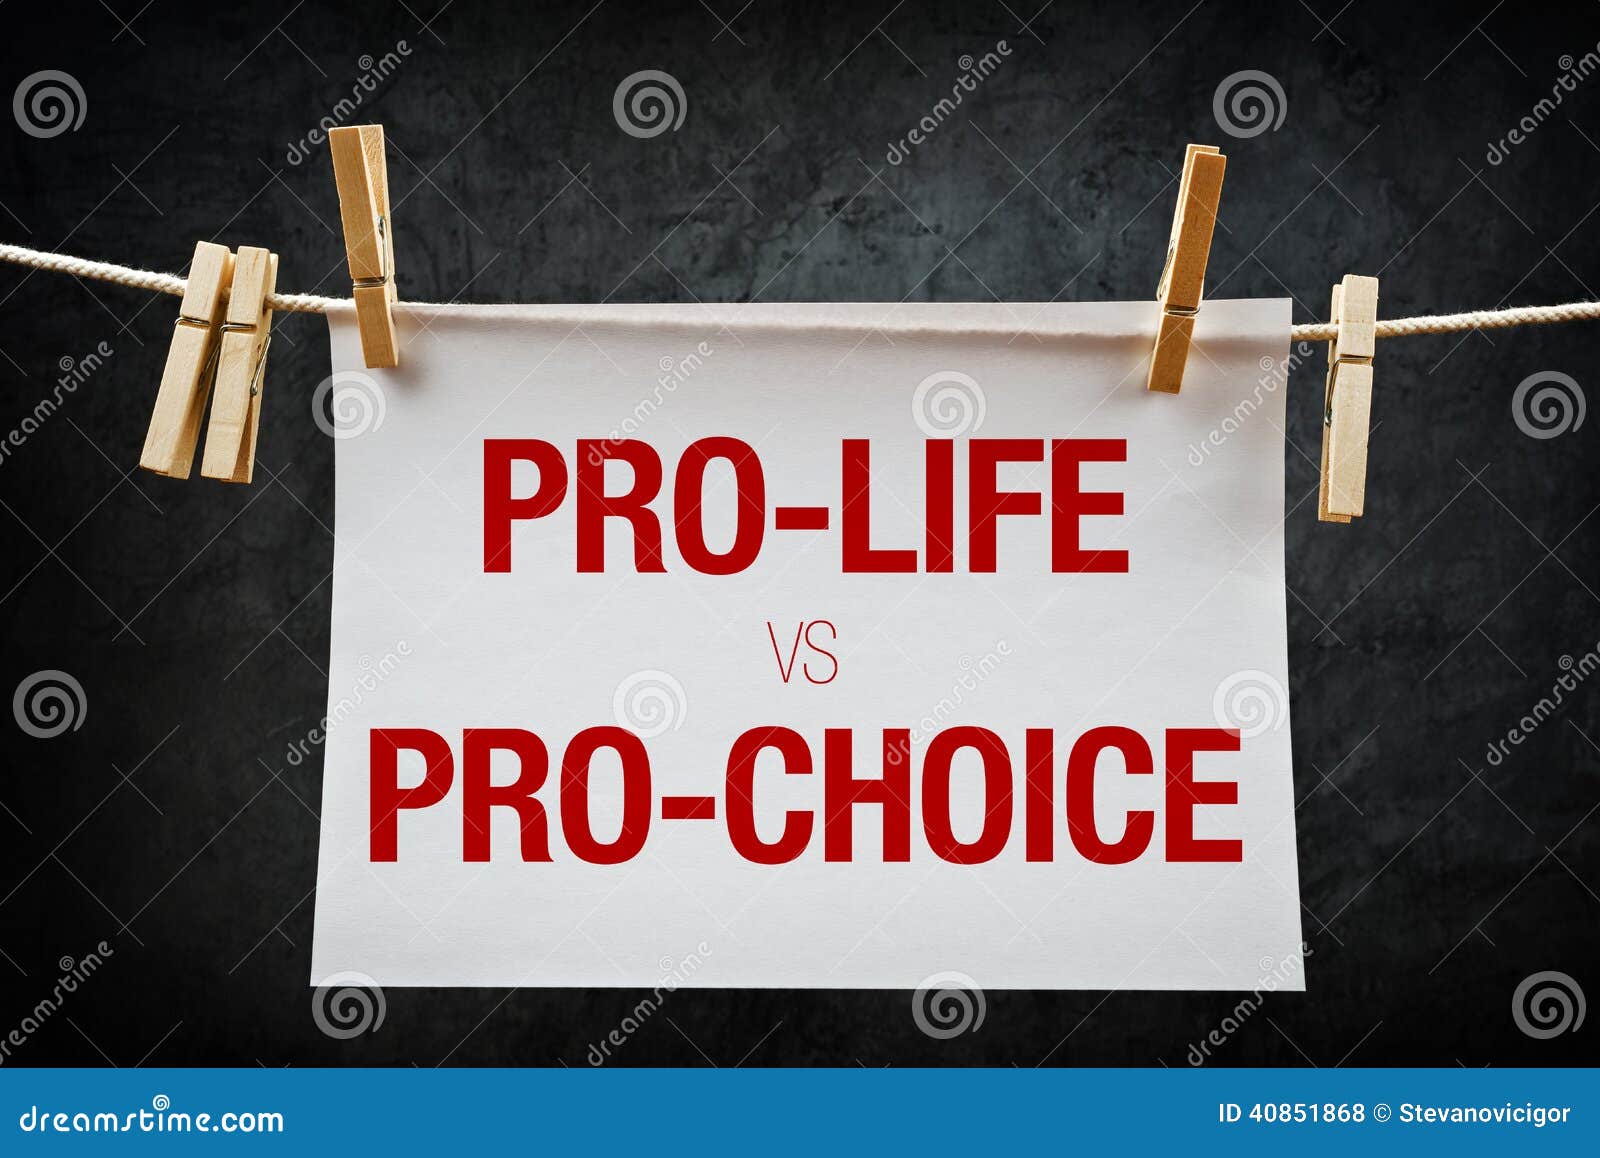 pro-life vs pro-choice, abortion concept